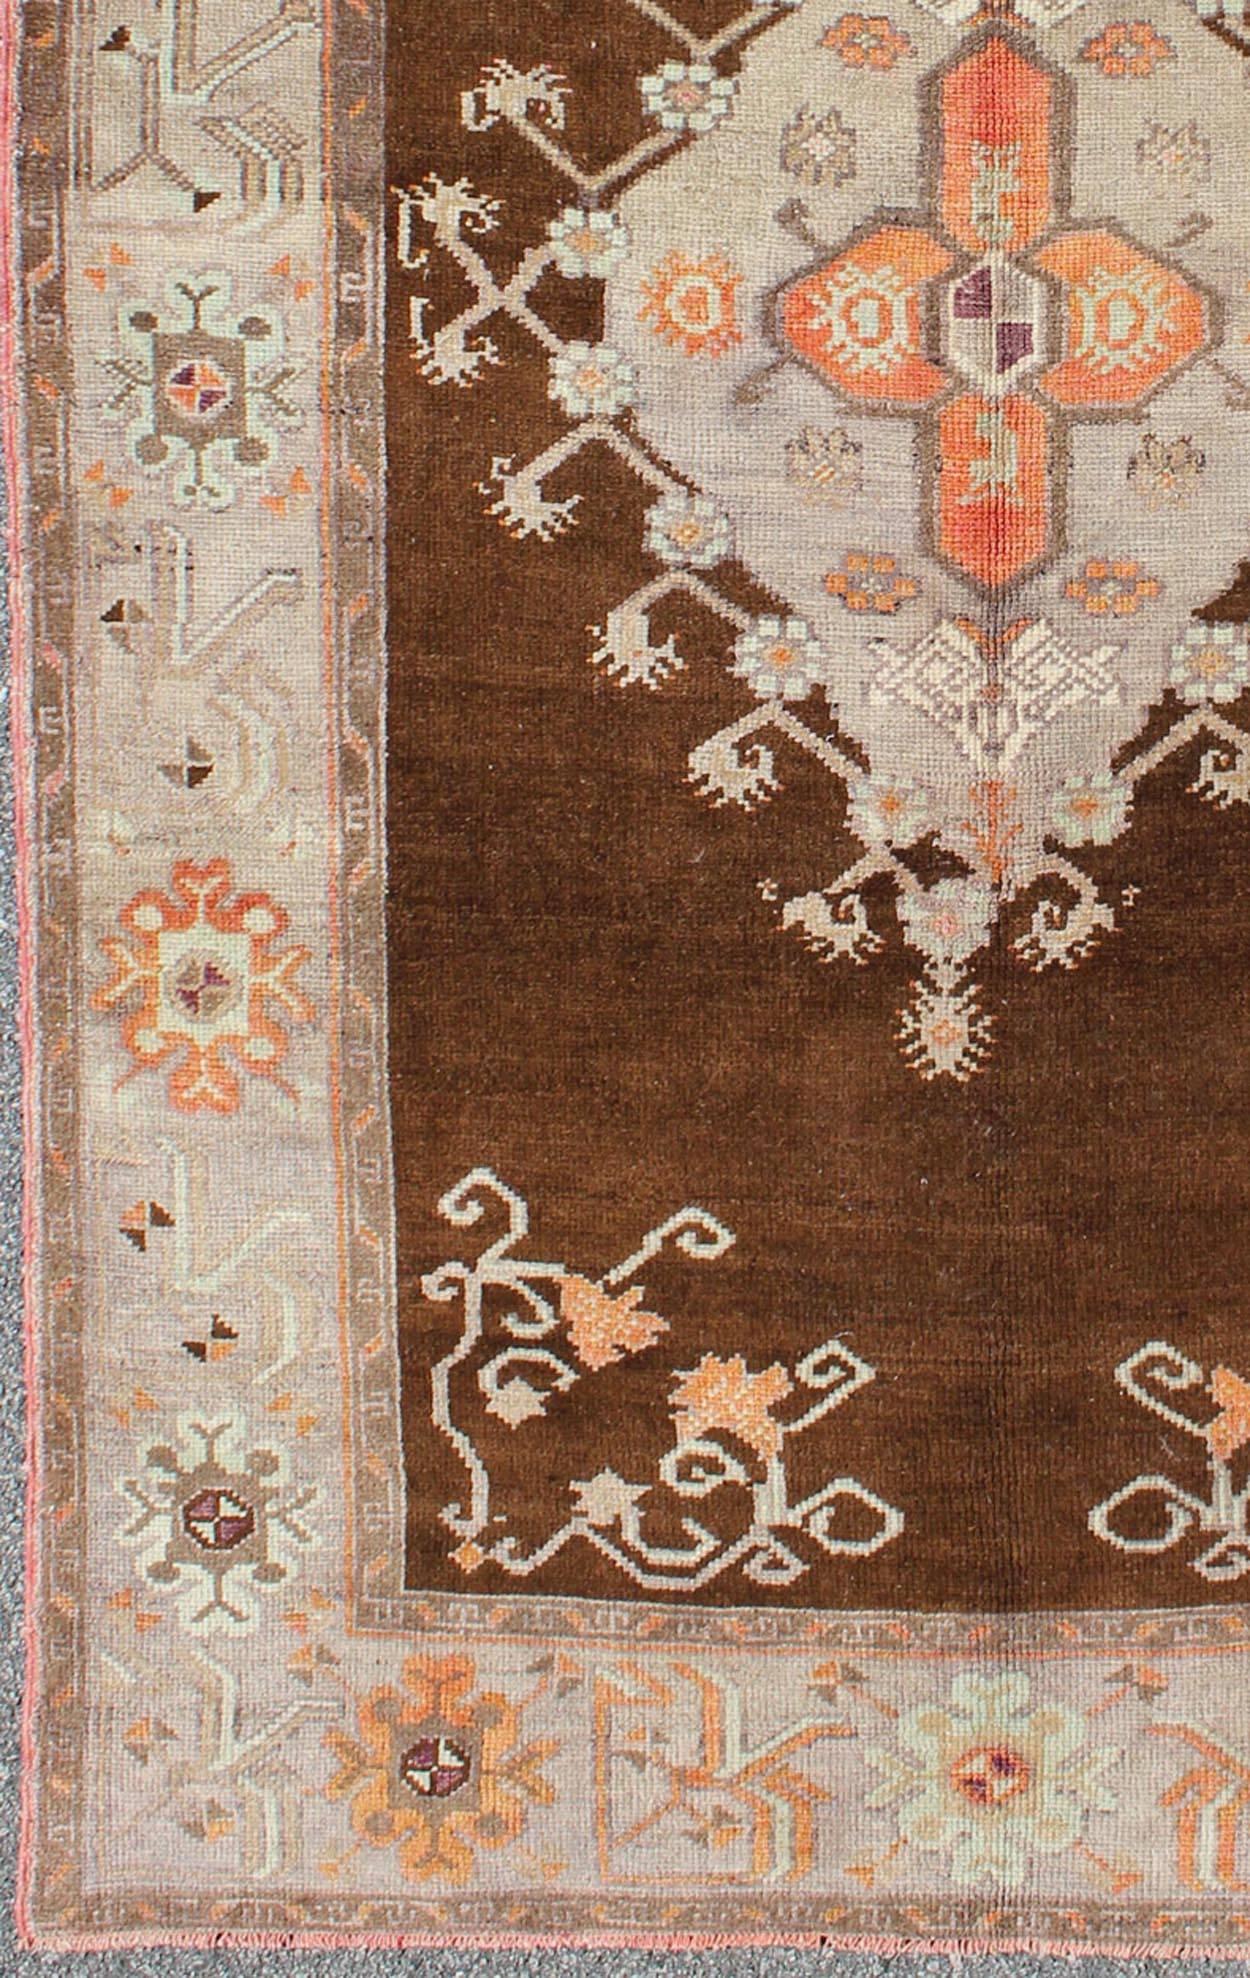 Vintage latch hook design Turkish Oushak rug in chocolate brown, taupe, gray and burnt orange, rug en-6301, country of origin / type: Turkey / Oushak, circa 1940.

This vintage geometric Oushak rug beautifully integrates latch hook designs to